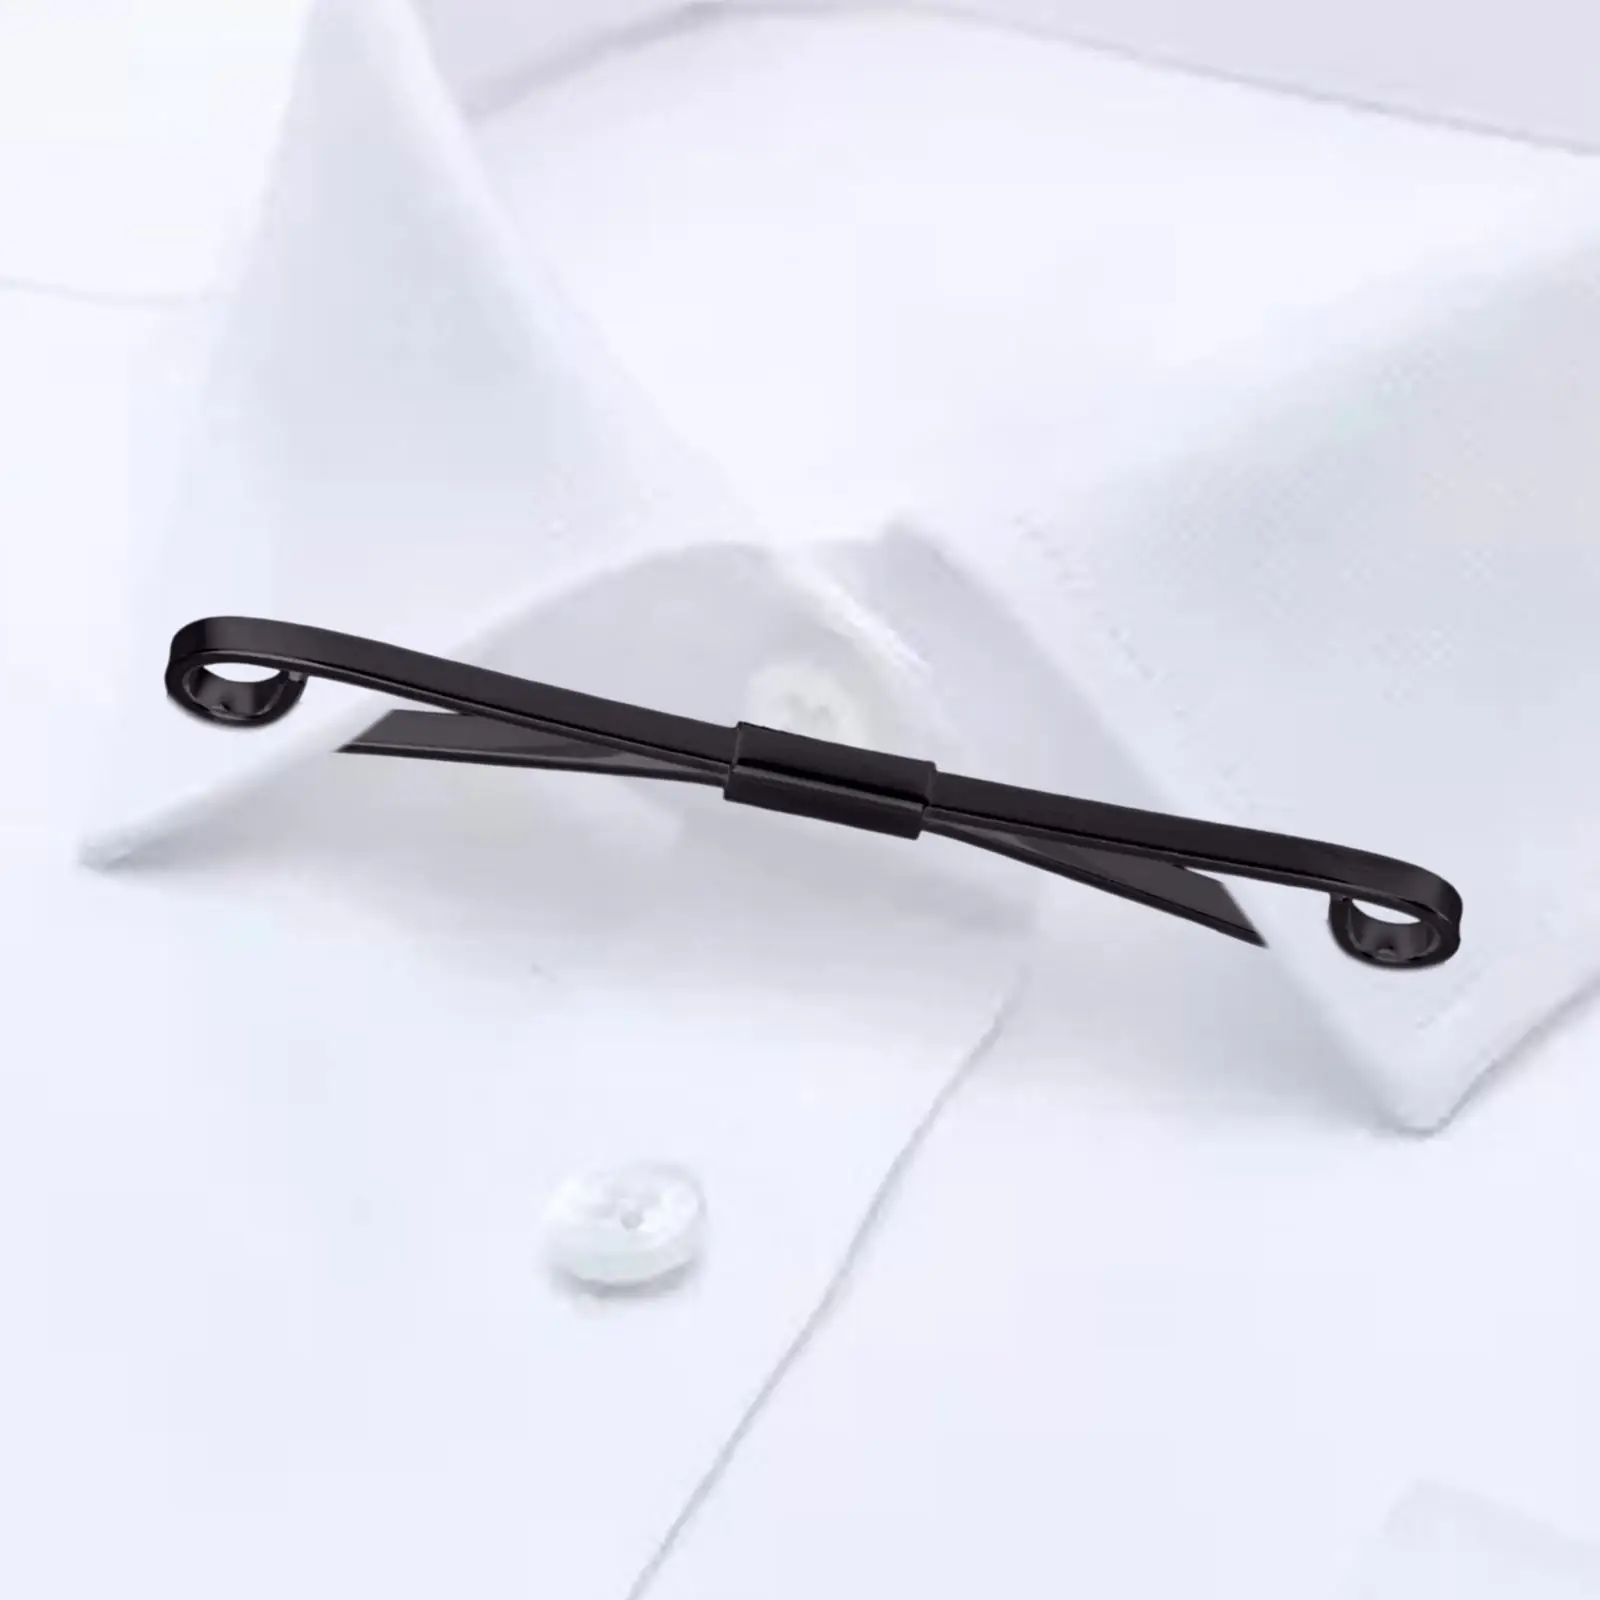 Classic Tie Collar Bar Pin Cravat Clasps Necktie Pinch Shirt Collar Clip Tie Clips Collar Pin Formal for Men's Business Wedding